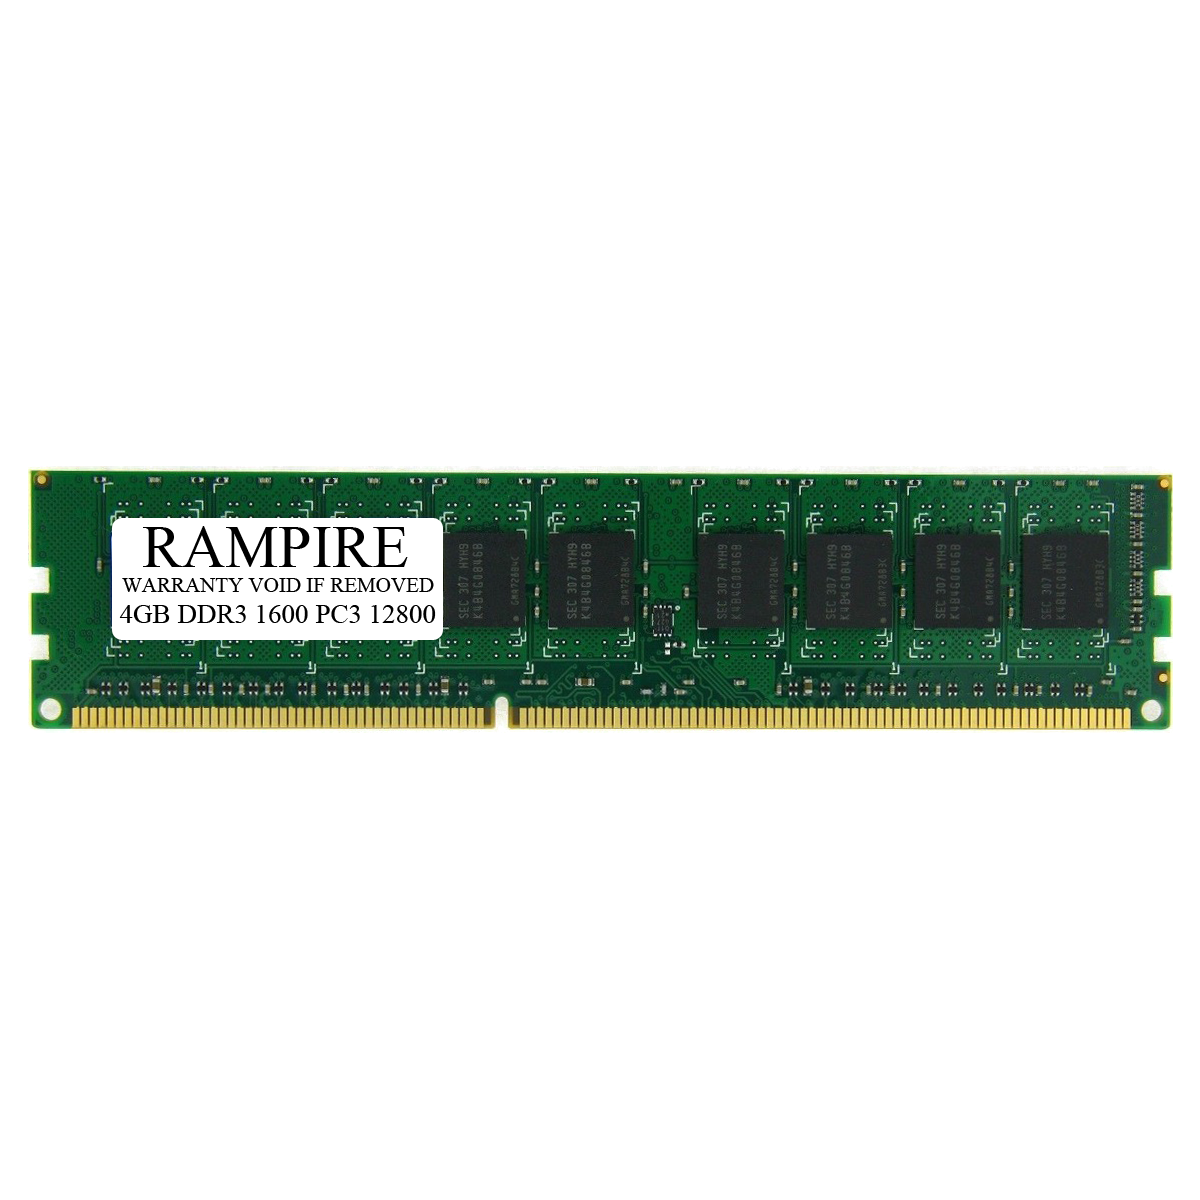 RAMPIRE 4GB DDR3 1600 (PC3 12800) 240-Pin SDRAM 2Rx8 Standard Profile 1.35V ECC Unregistered Server Memory